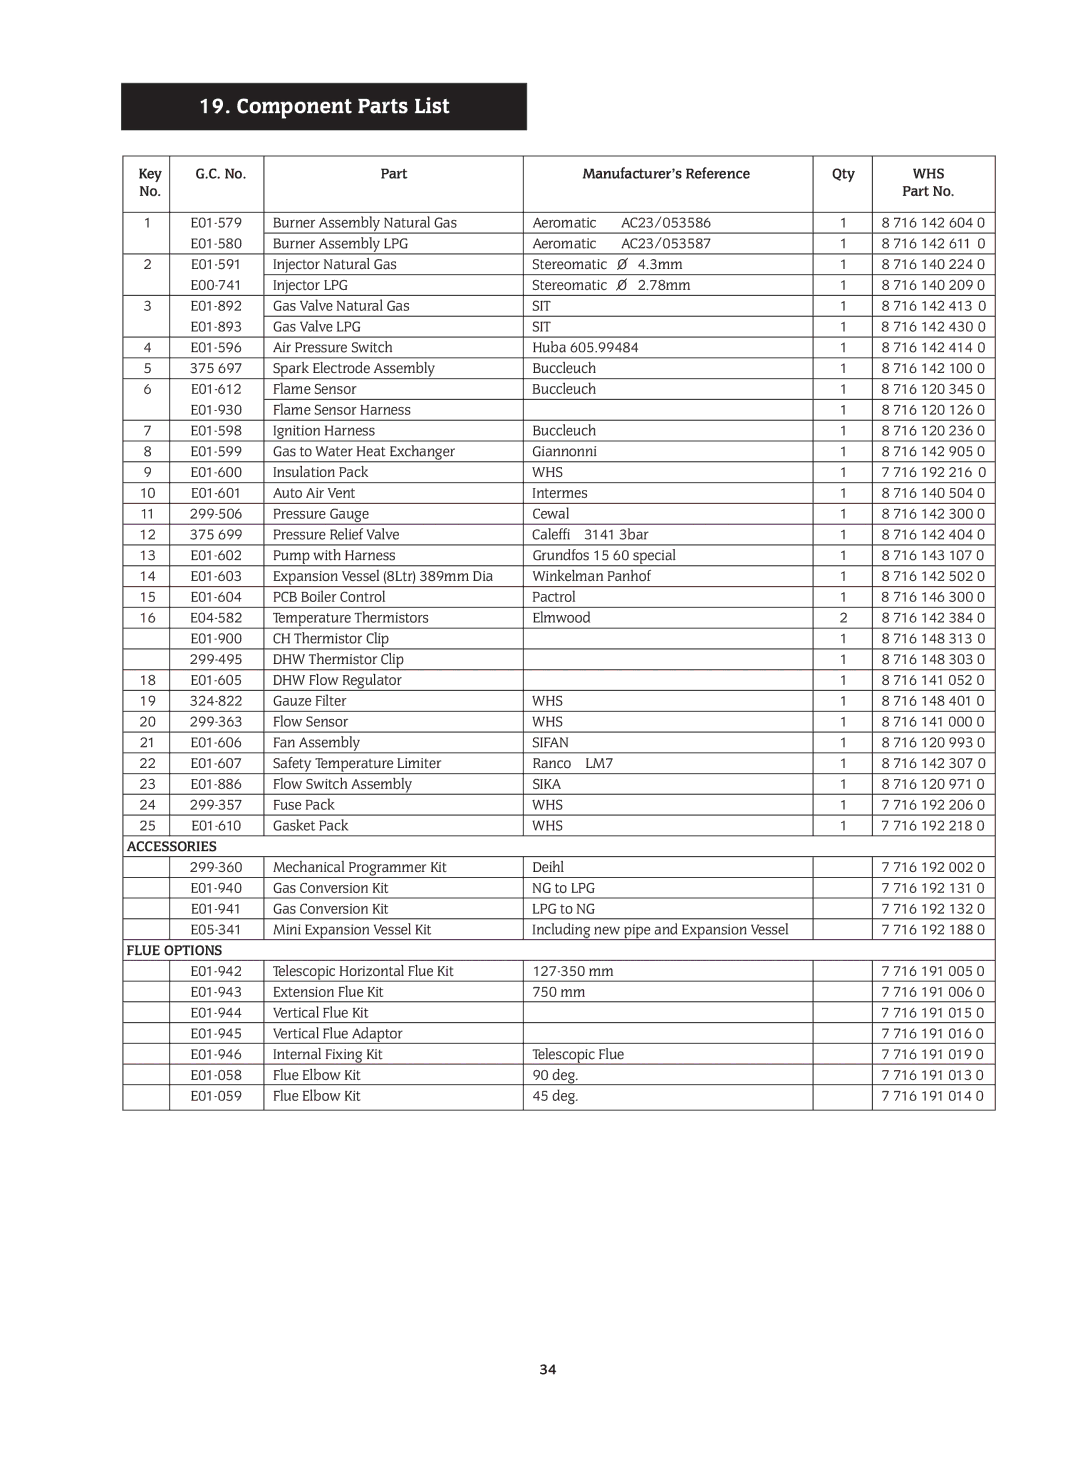 Bosch Appliances 24I RSF manual Component Parts List 